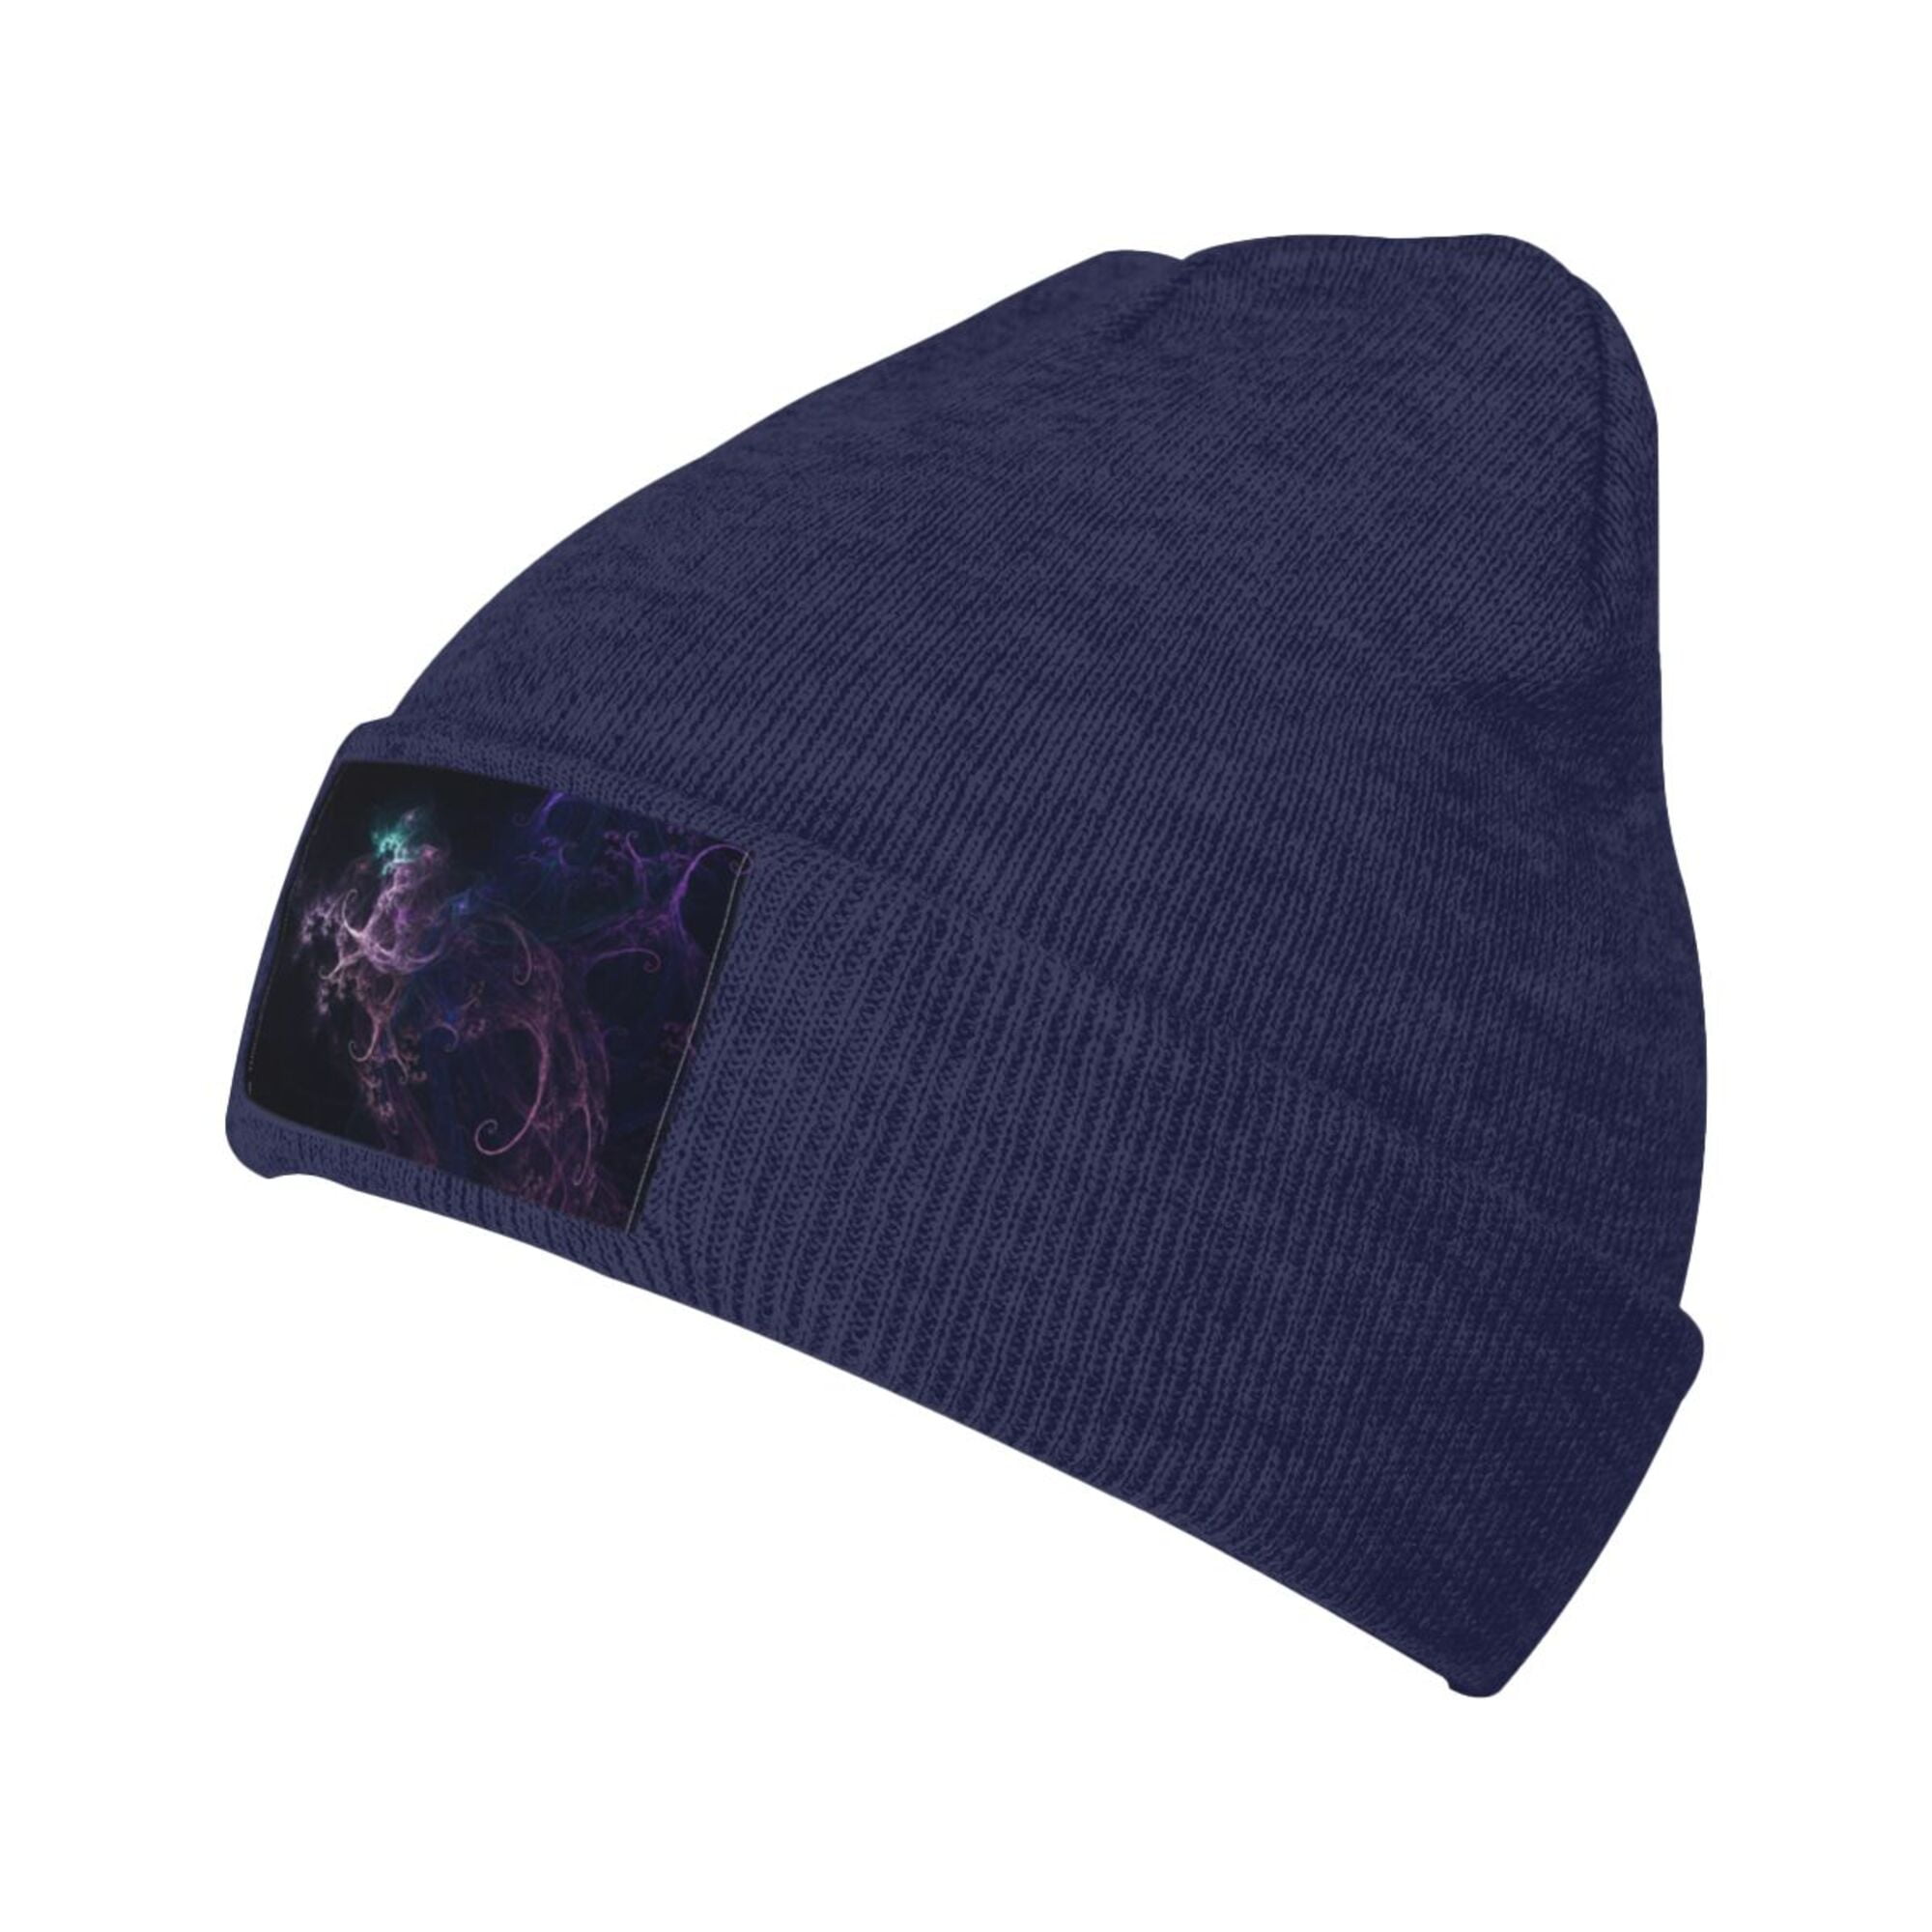 ZICANCN Knit Beanie Hat-Psychedelic Fractals Spiral Winter Cap Soft Warm  Classic Hats for Men Women Geometry